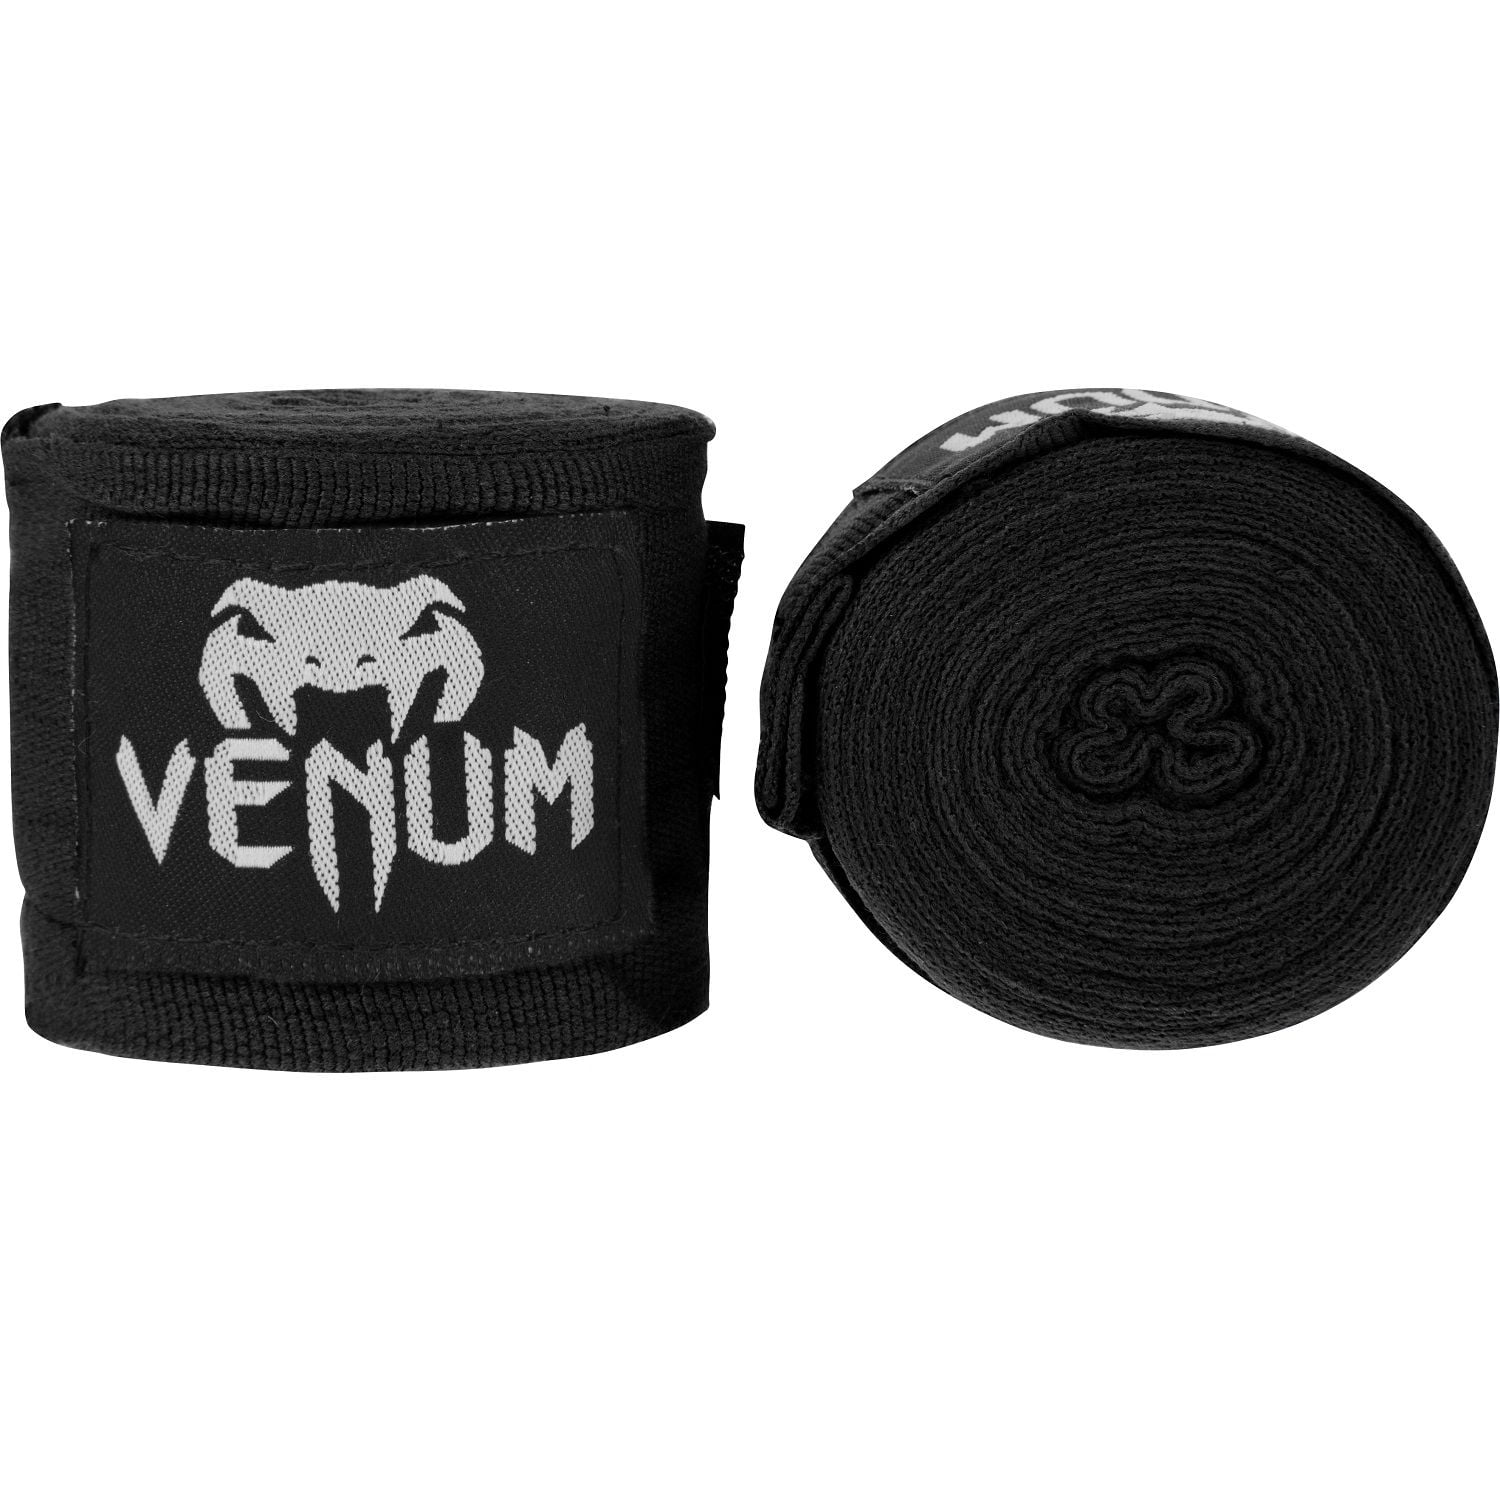 Venum Unisex Adult Kontact Boxing Handwraps 2.5m Black 